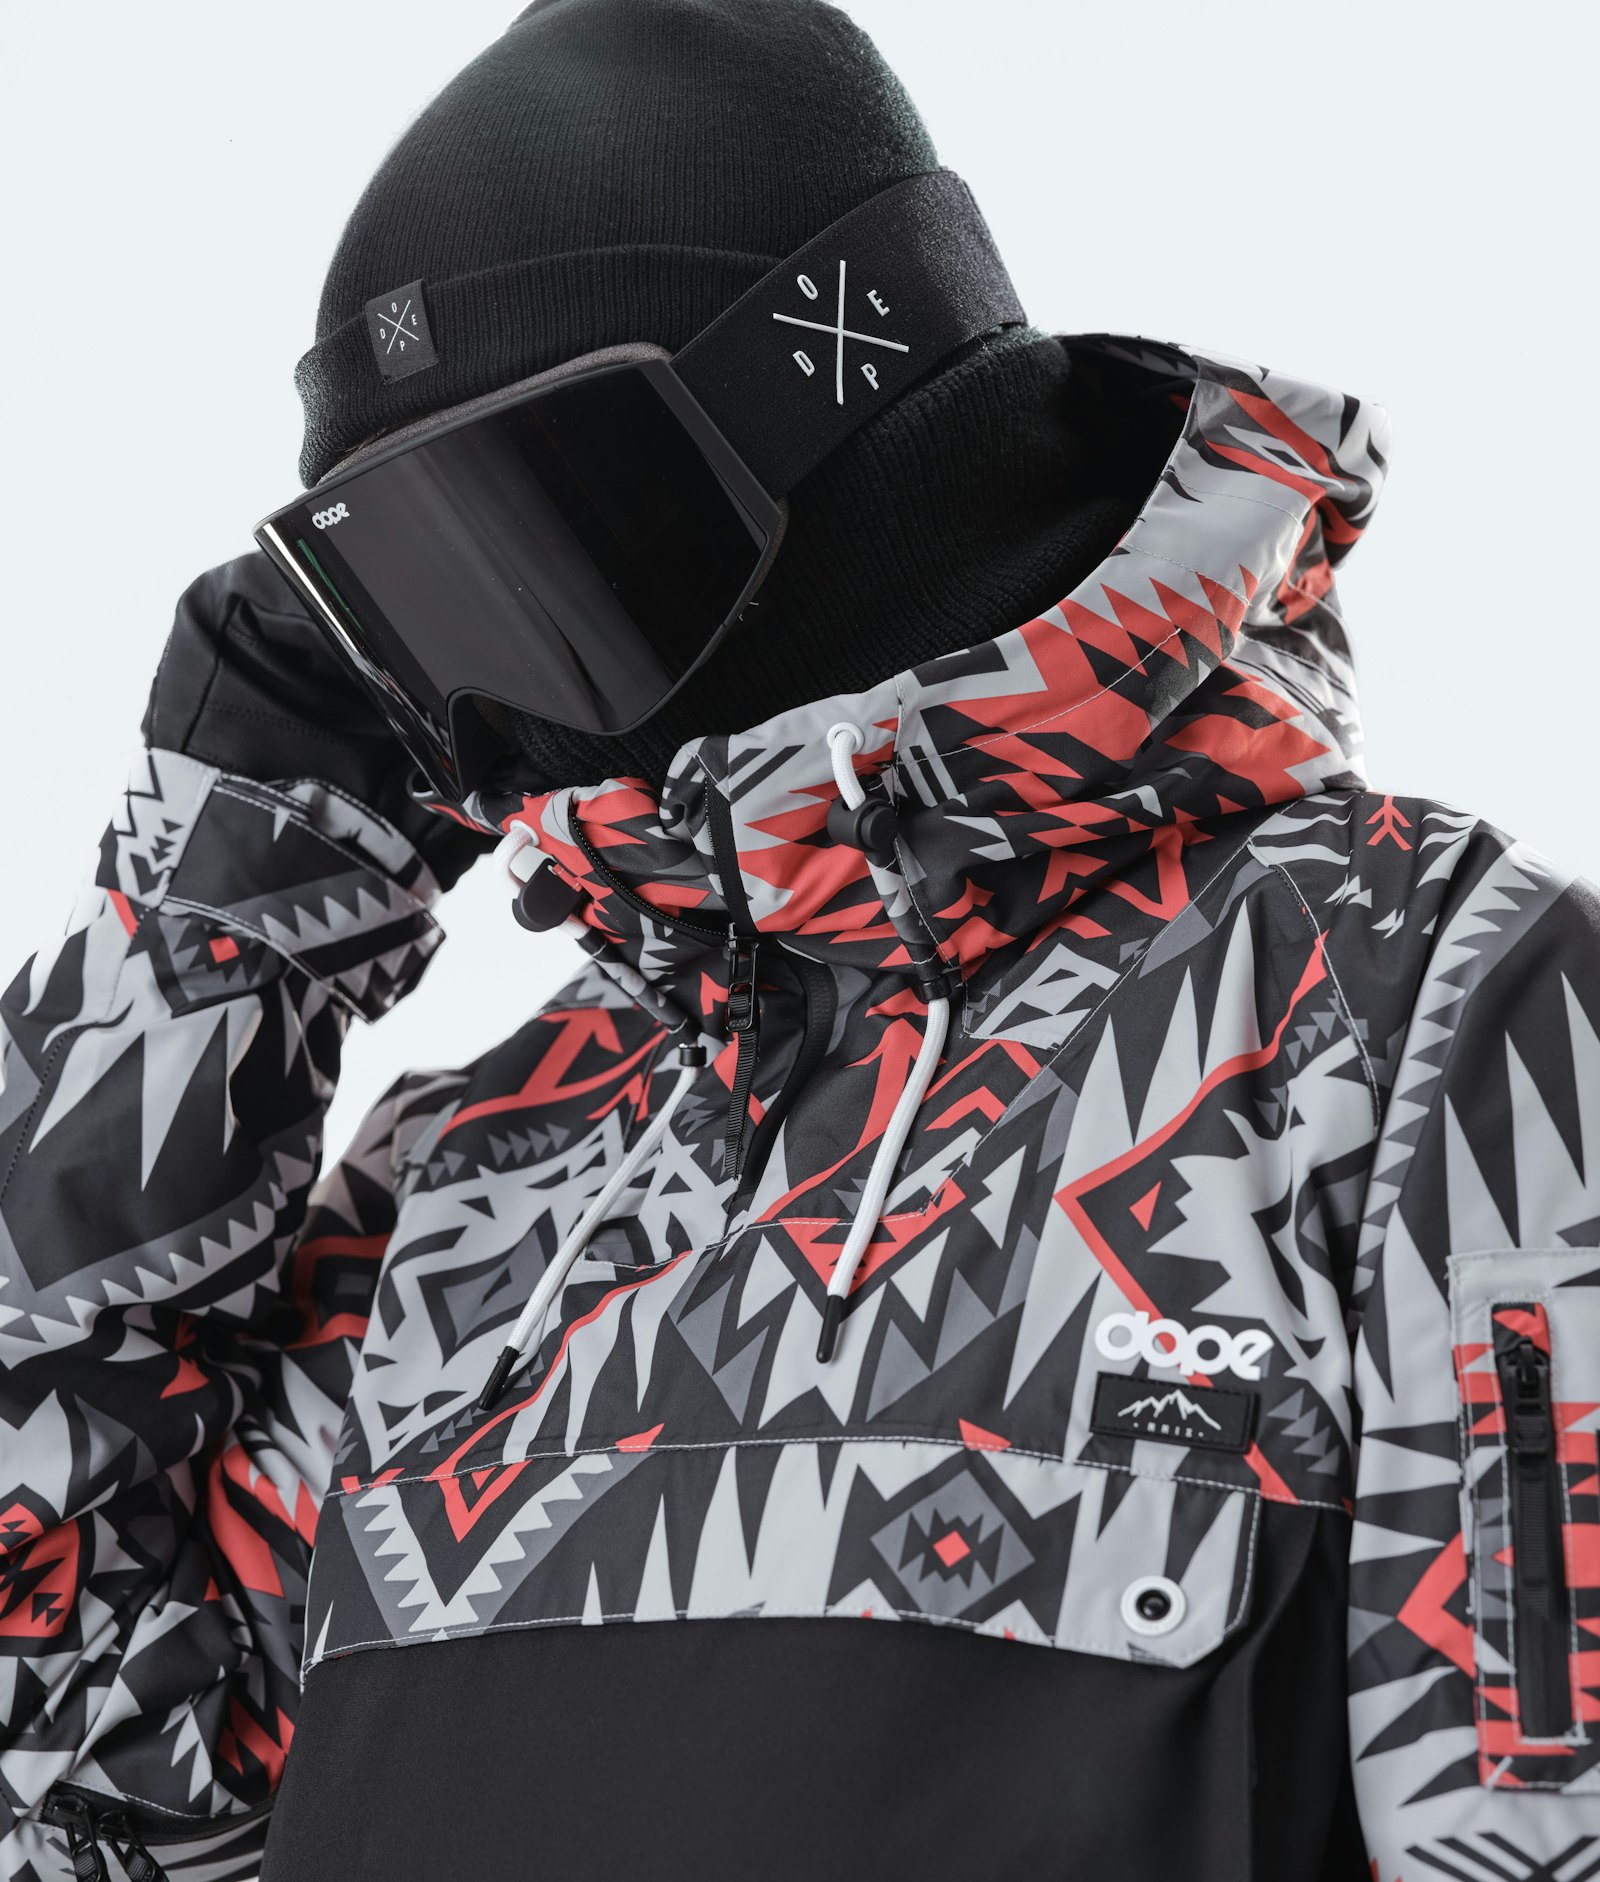 Annok 2020 Veste Snowboard Homme Arrow Red/Black